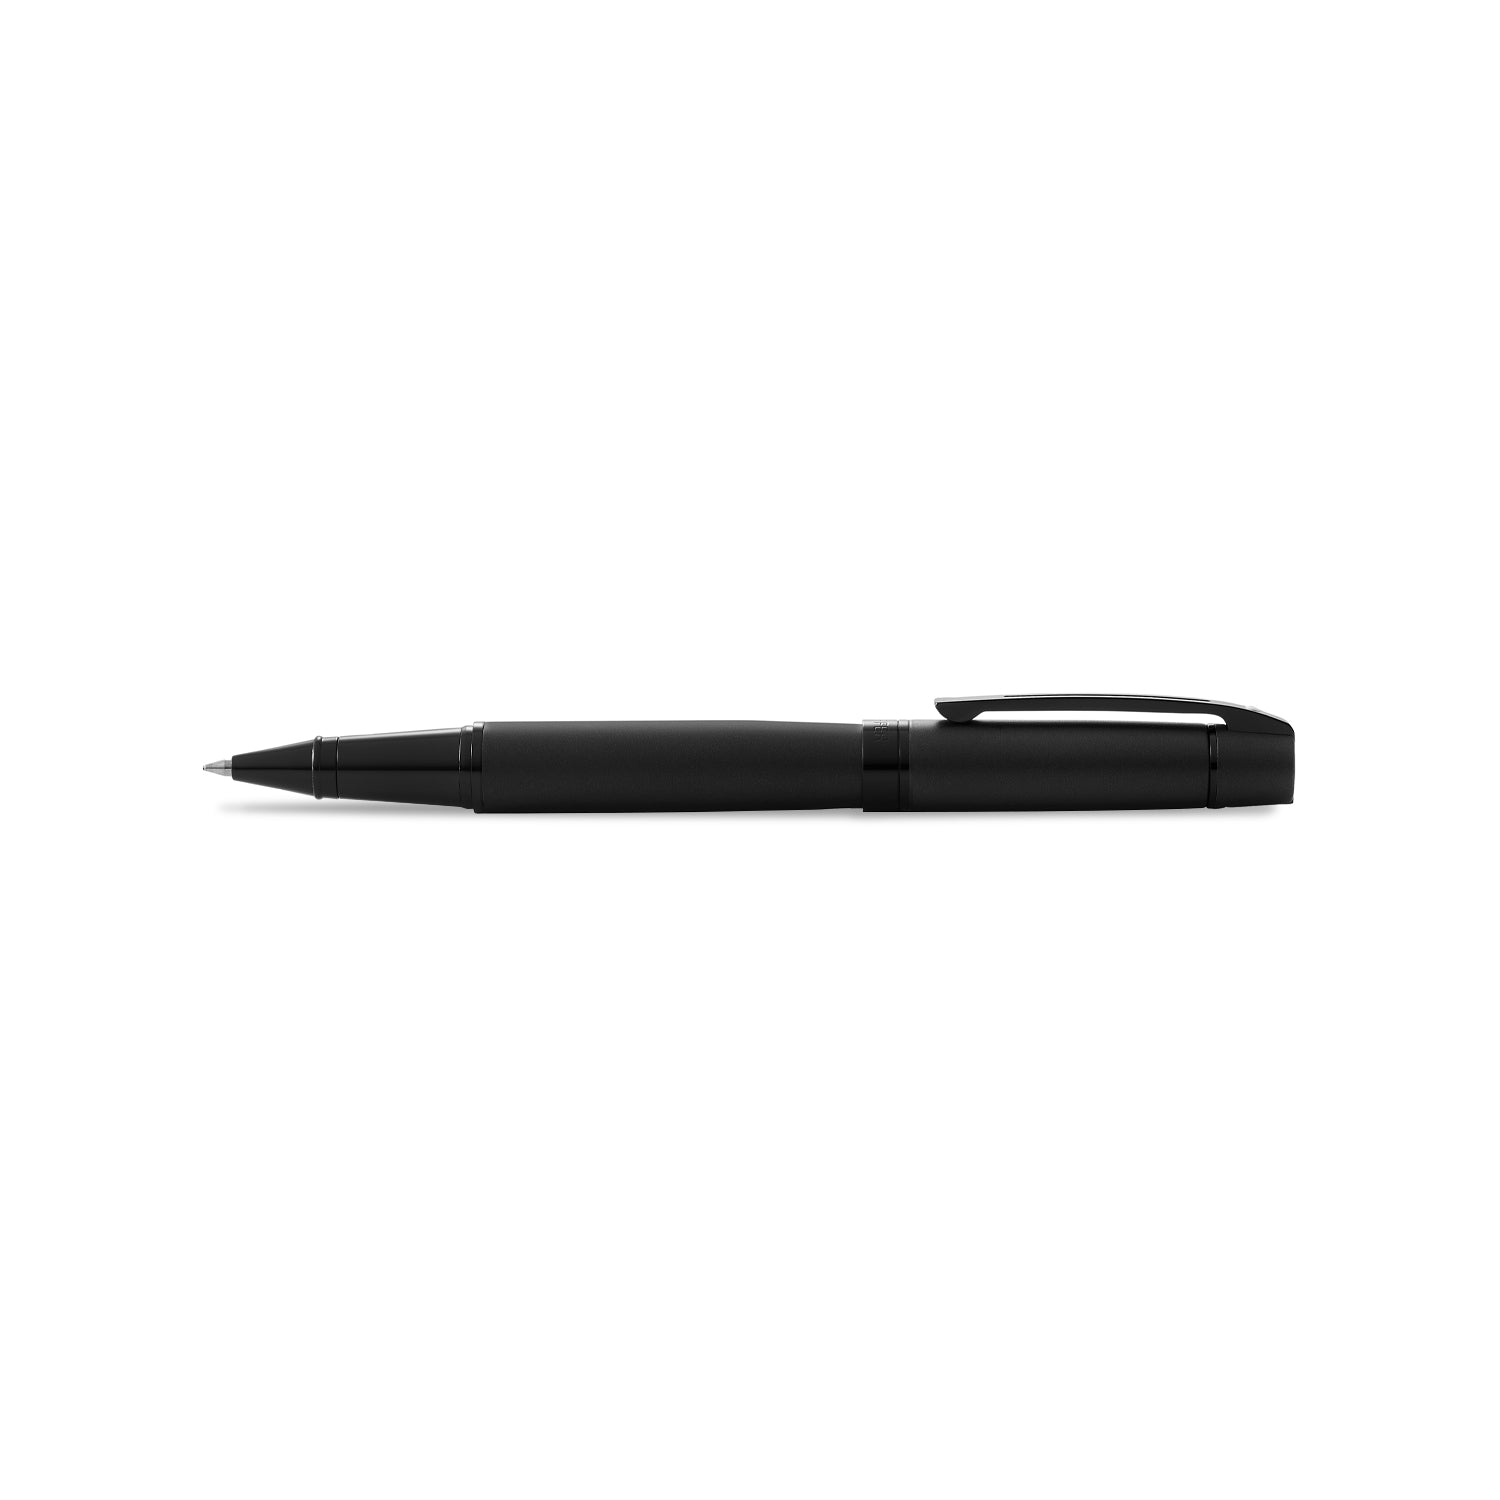 Sheaffer – Mat's Pens